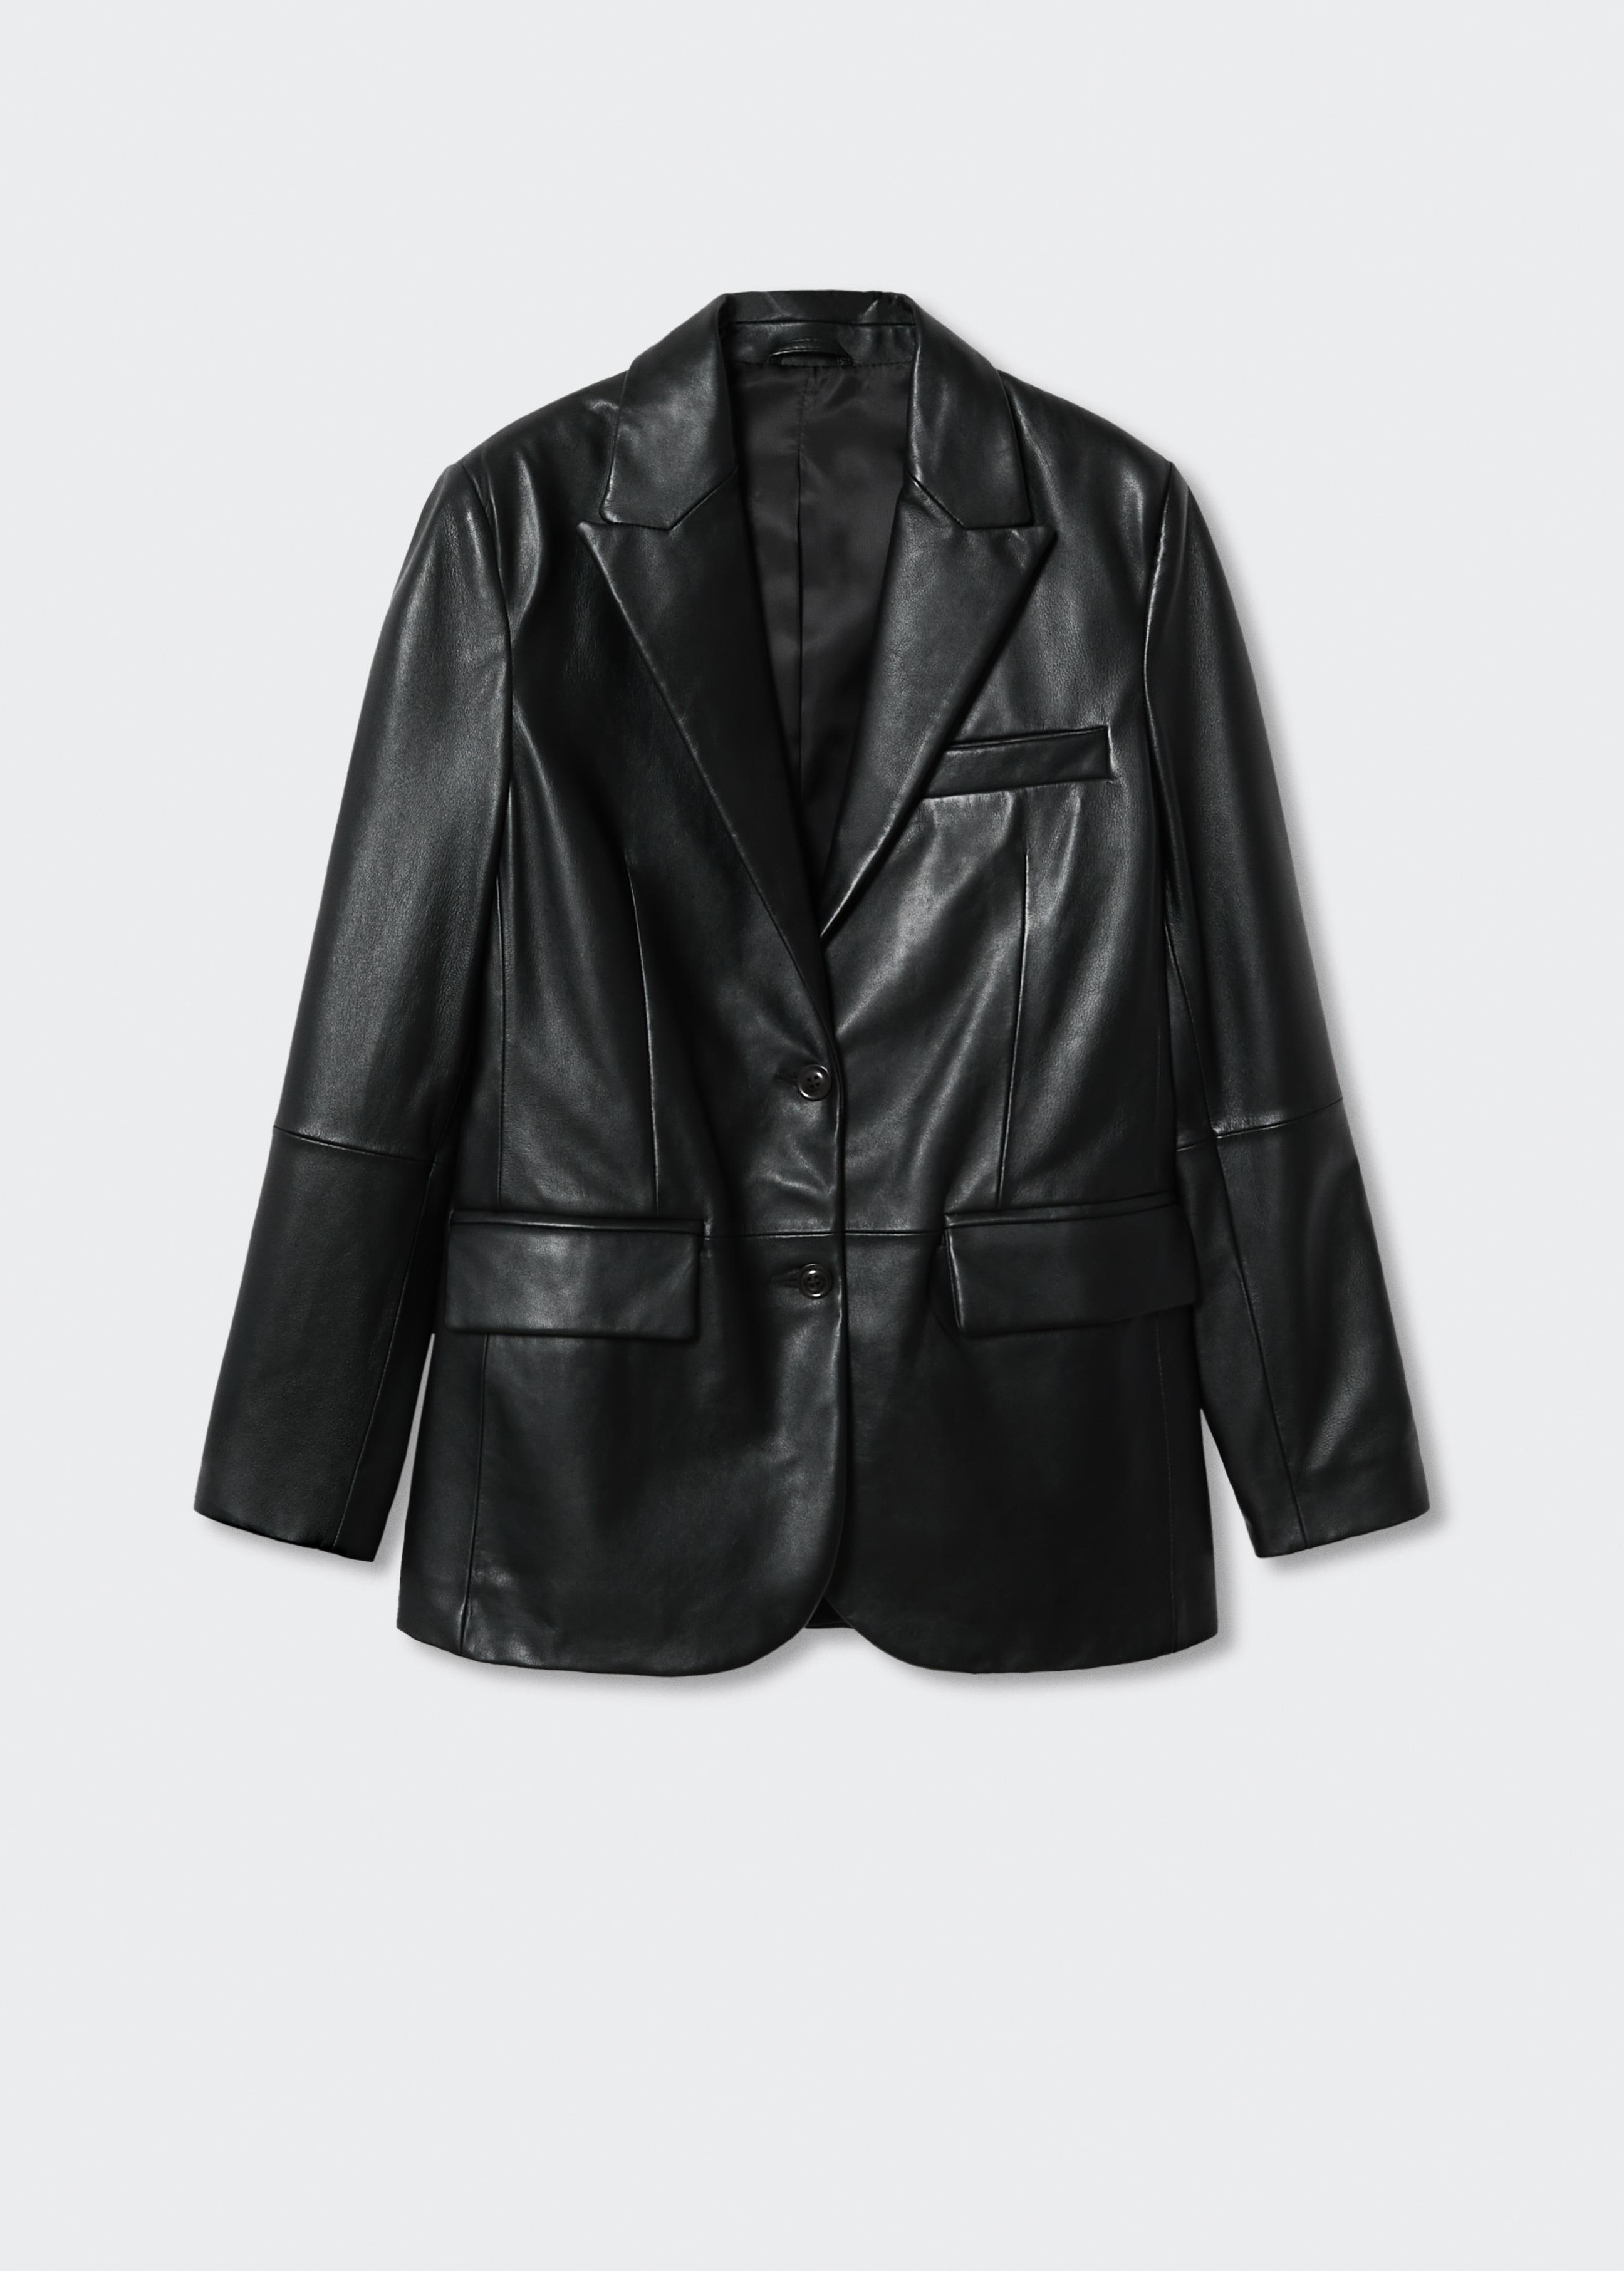 Fringed leather jacket - Article without model